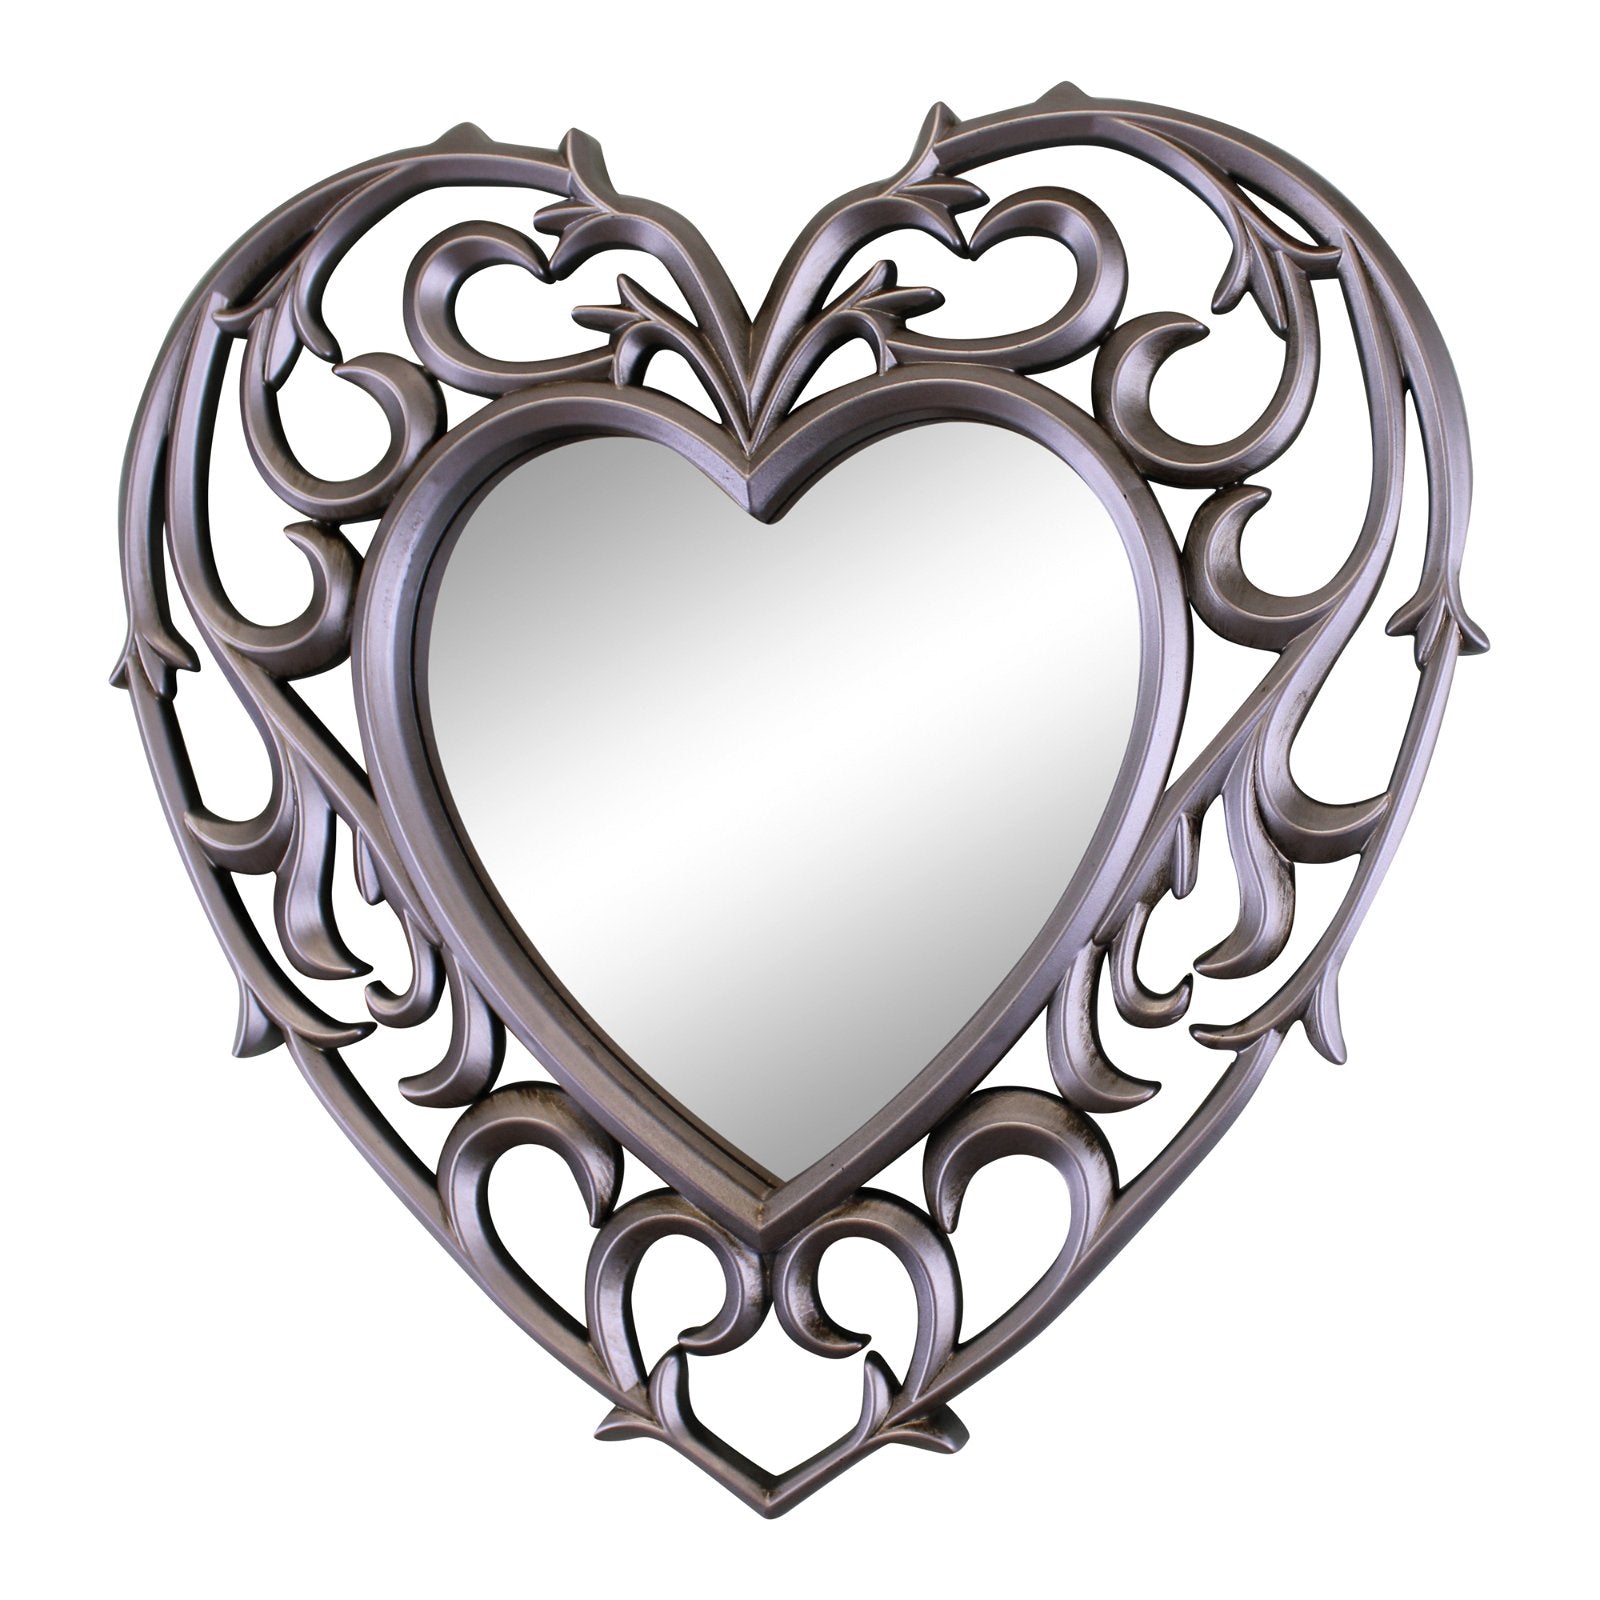 Set of 3 Decorative Silver Filigree Heart Shaped Wall Mounted Mirrors